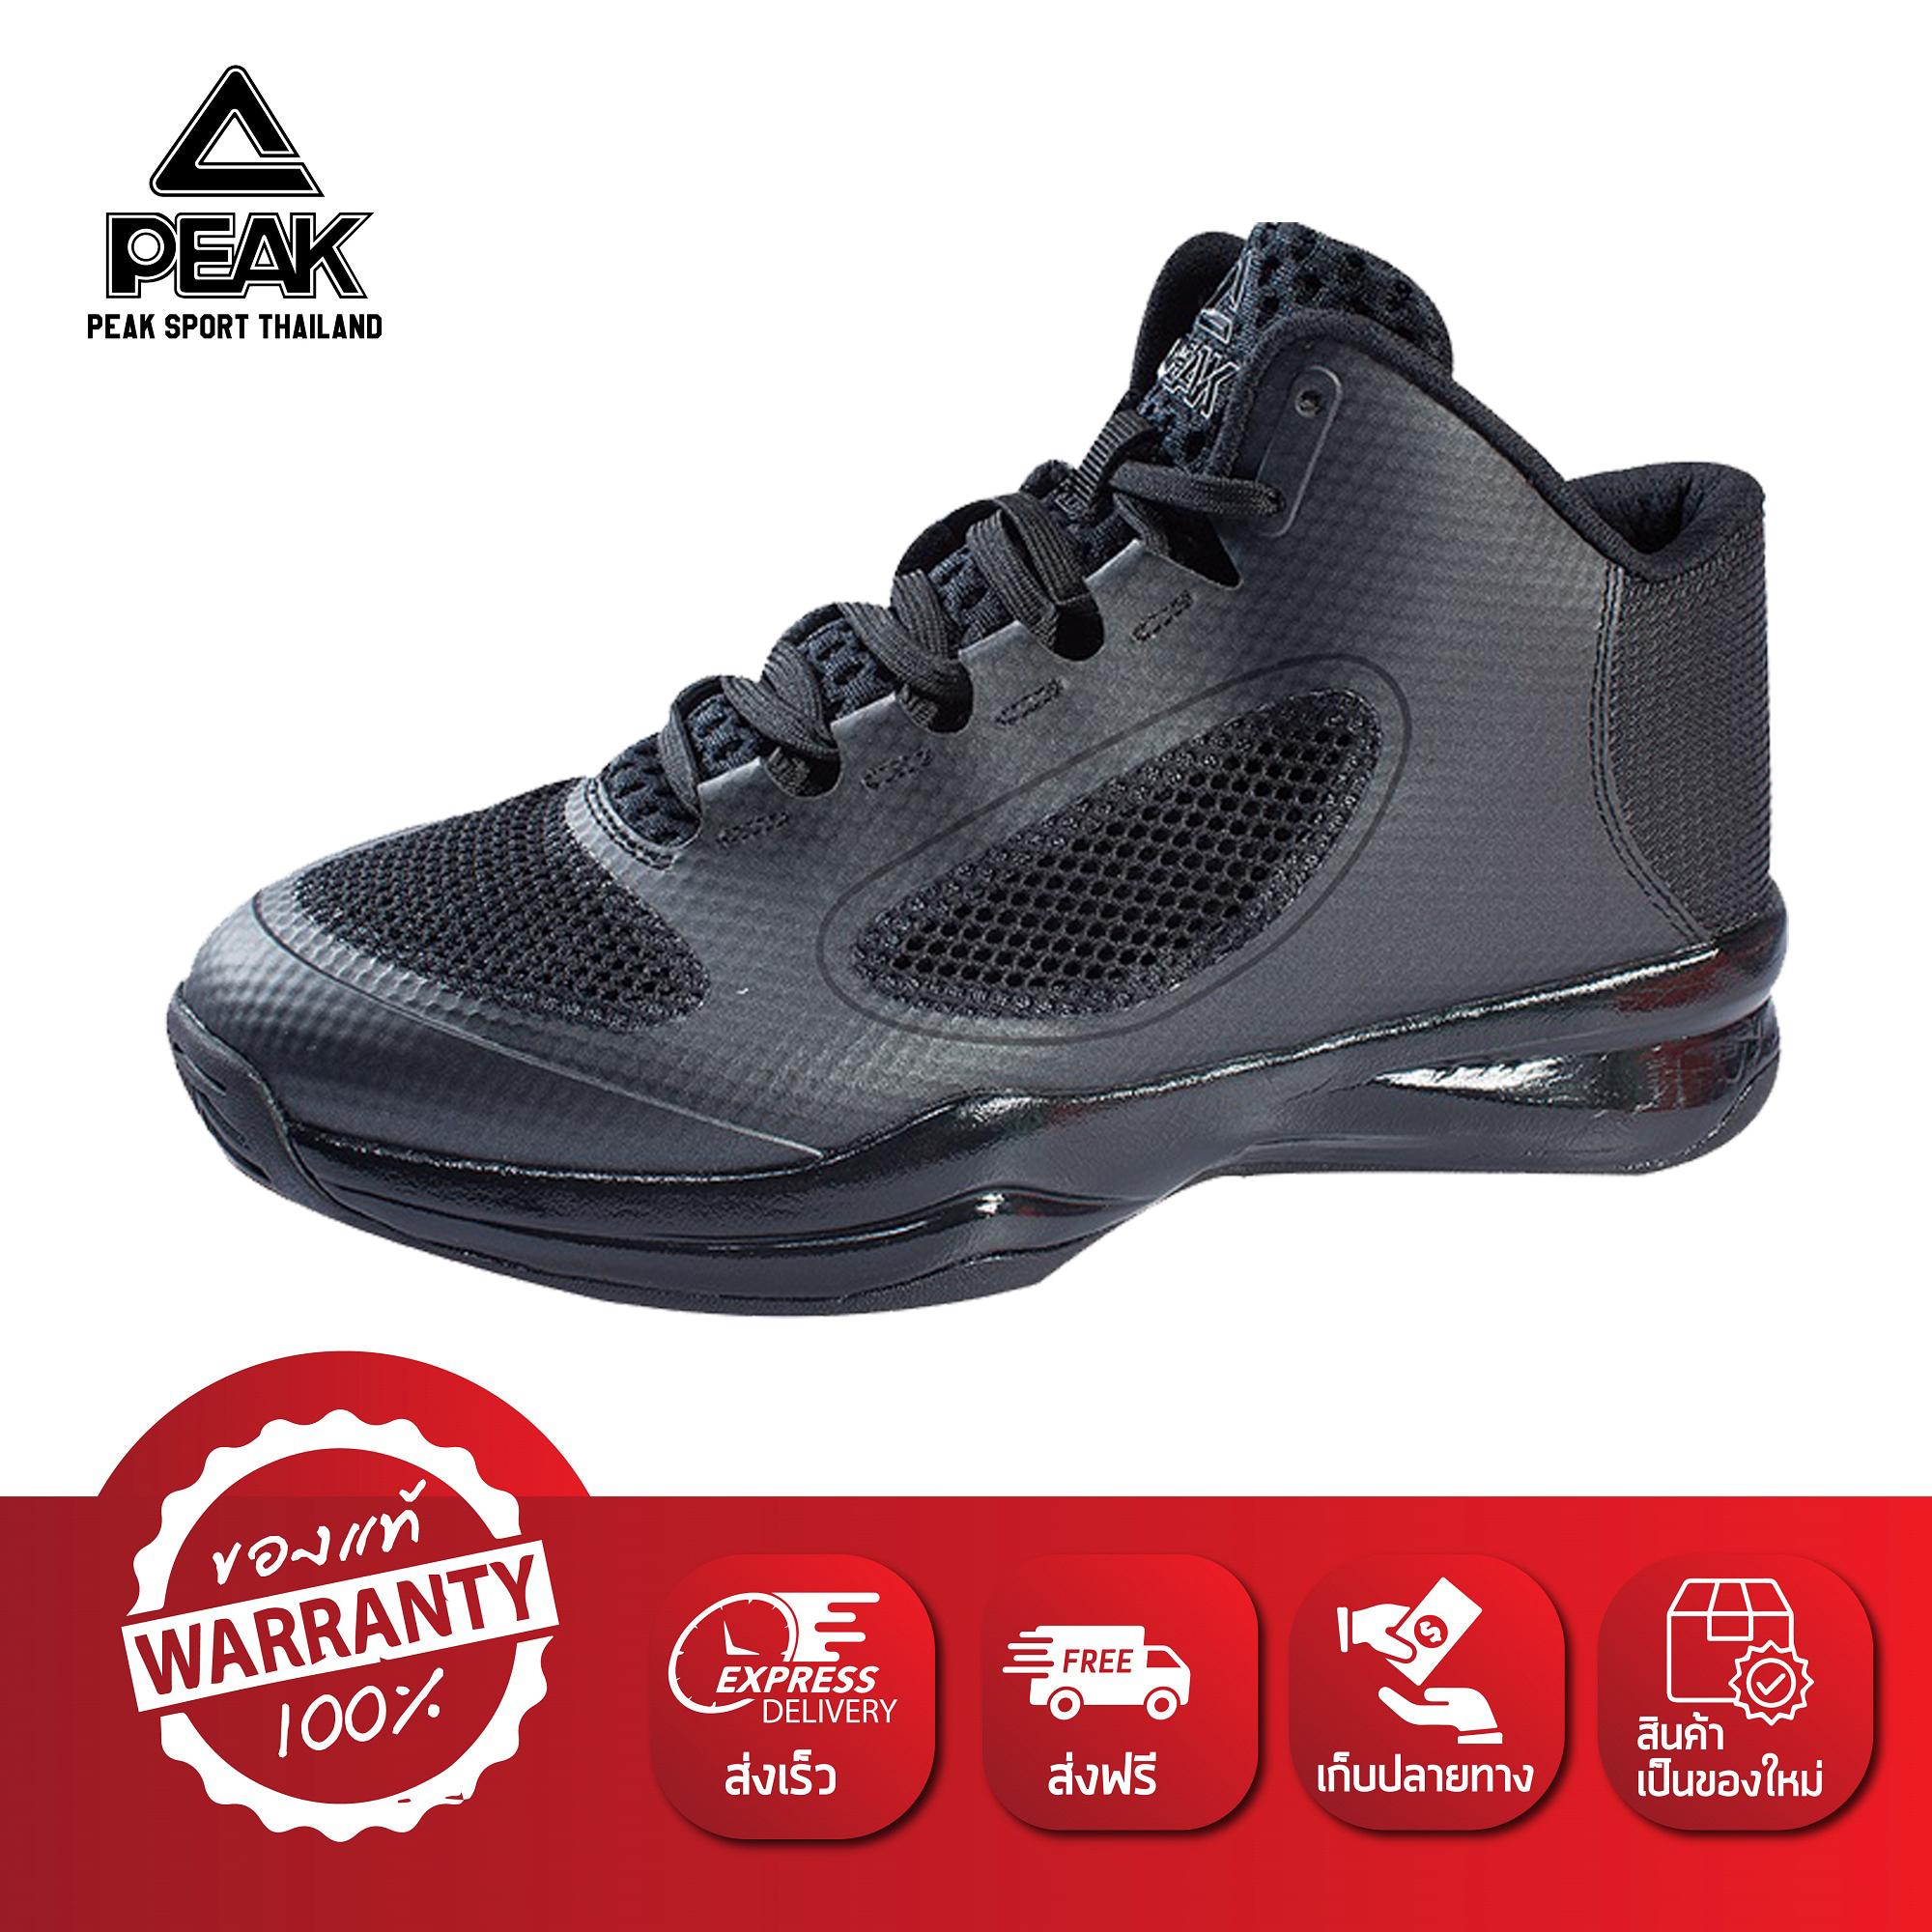 PEAK รองเท้า บาสเกตบอล Basketball shoes พีค Sneak รุ่น E82008A Black (มี 3สี ดำ,ส้ม,เขียว)